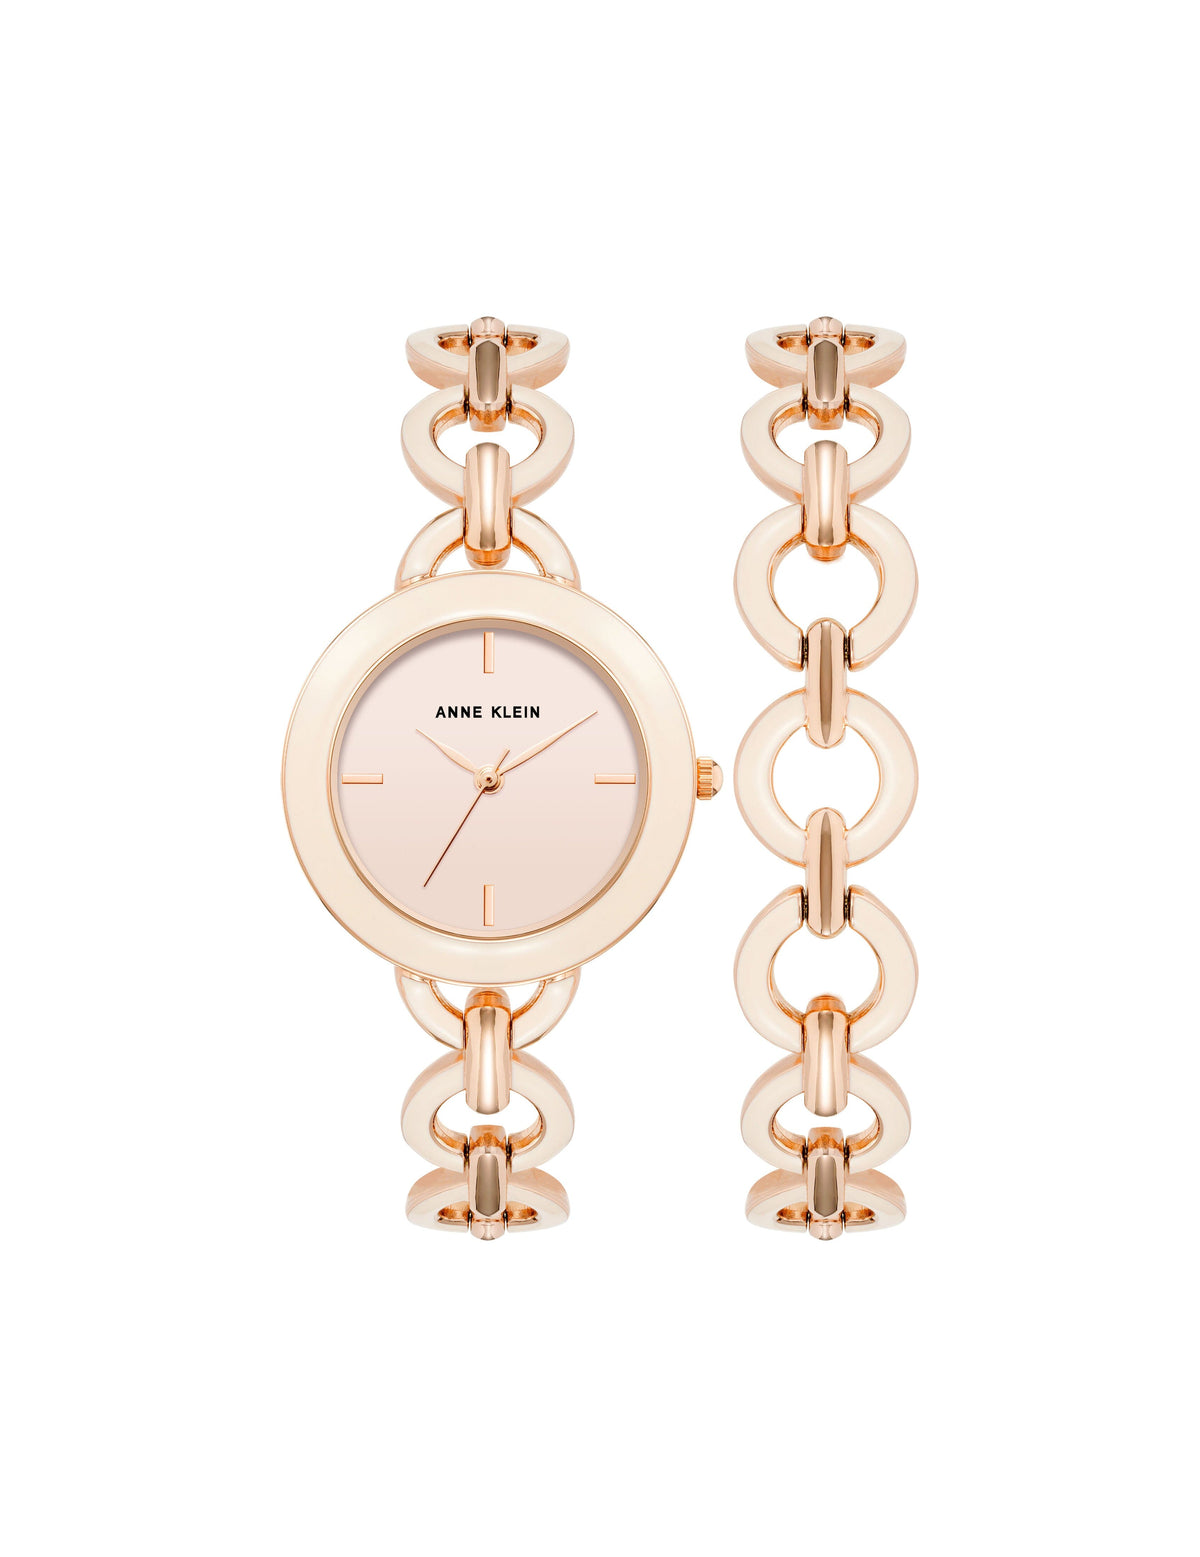 Anne Klein Blush Pink/ Rose Gold Tone Boyfriend Circular Link Bracelet Watch Set - Clearance